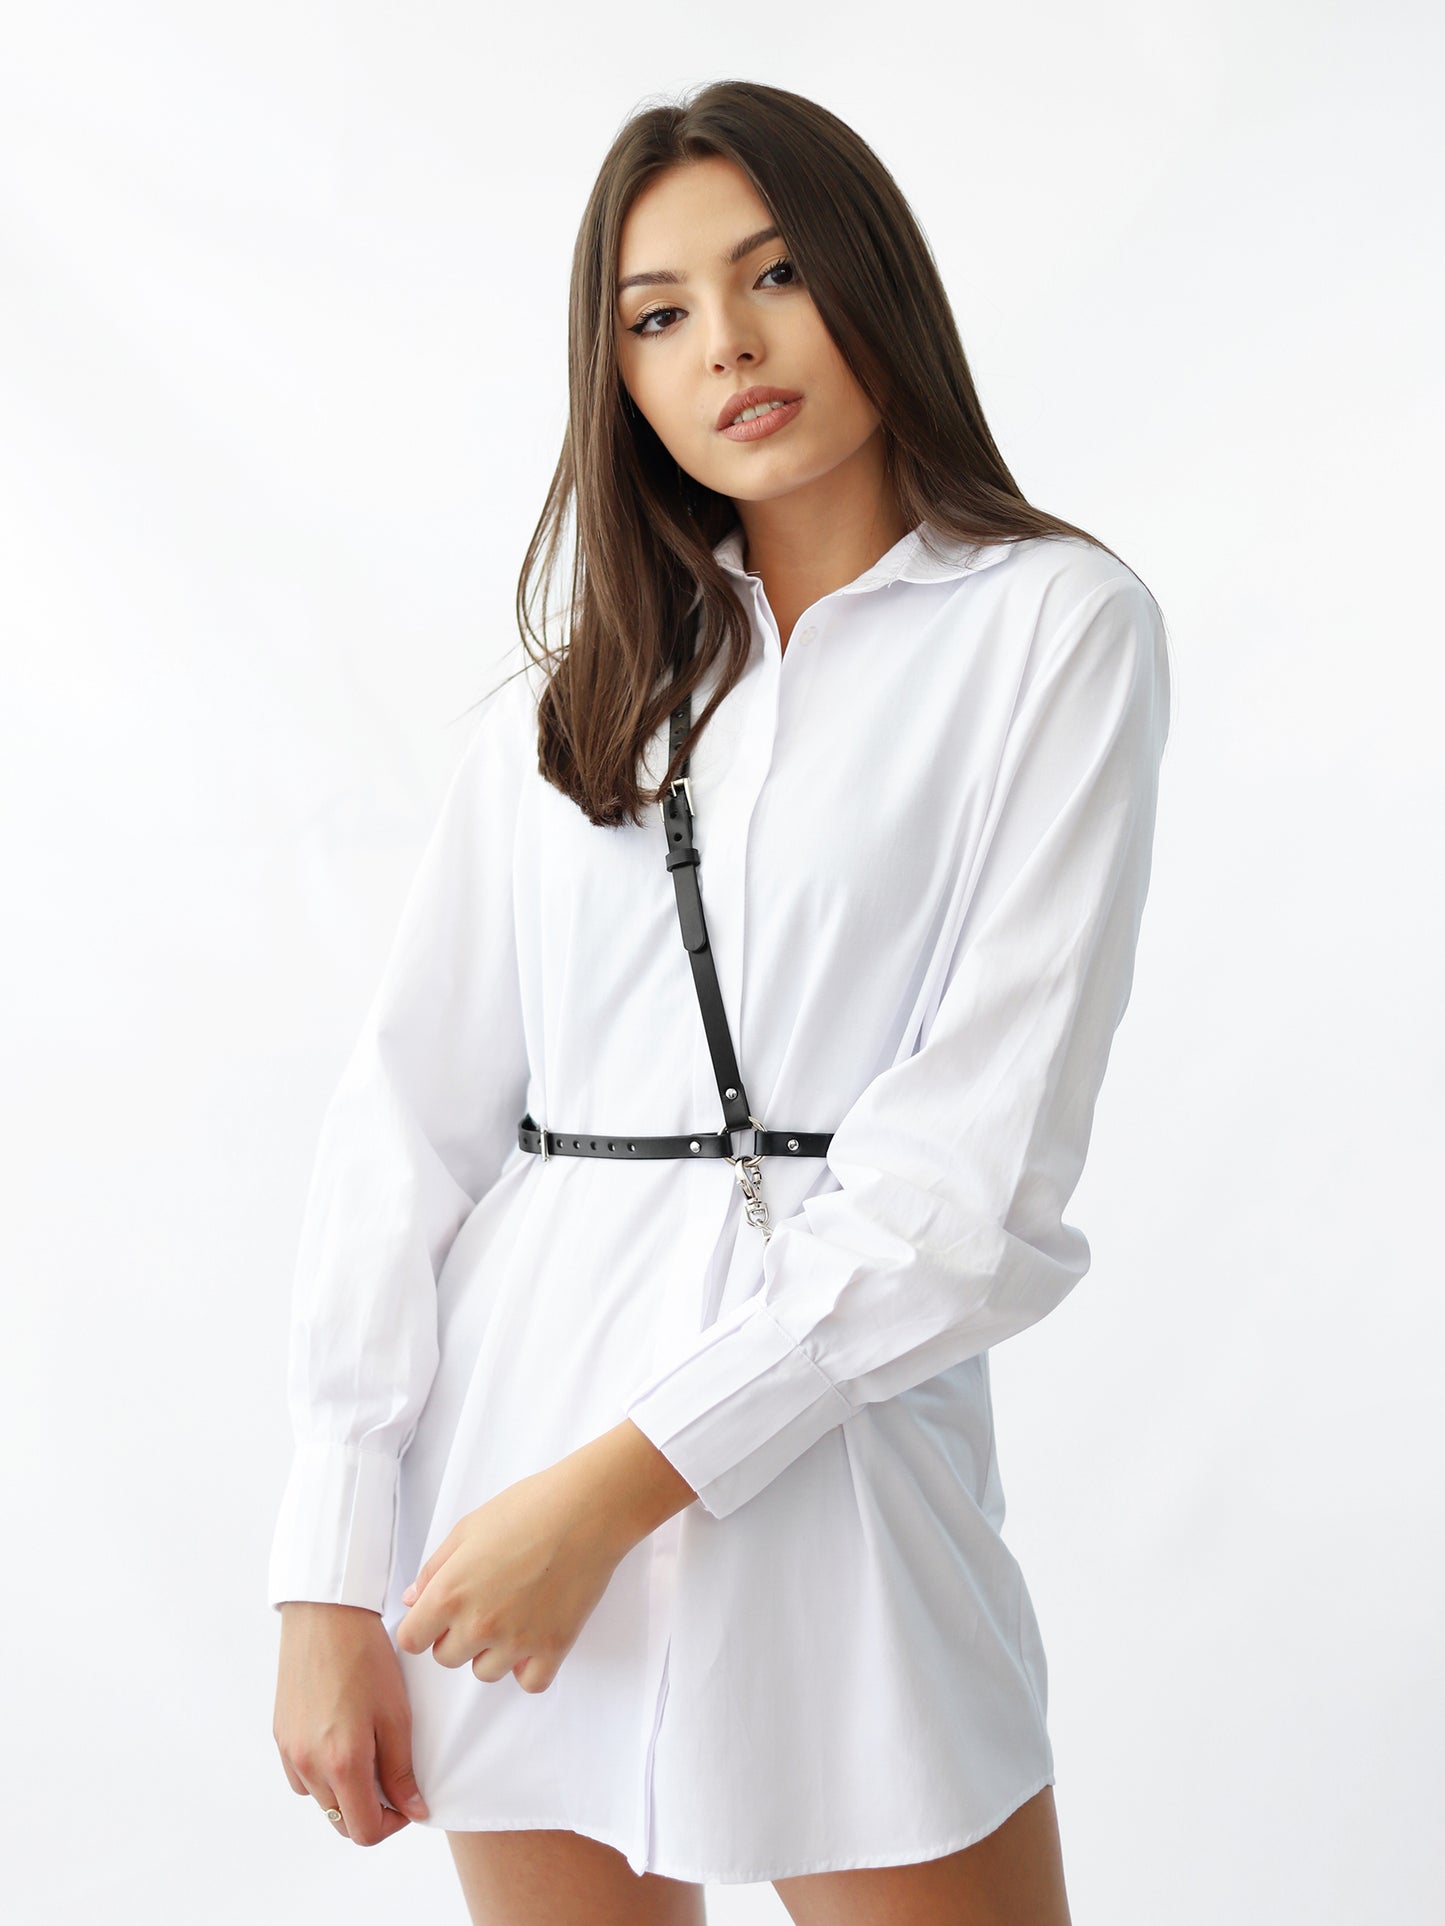 Slim leather chain harness worn over white shirt dress.